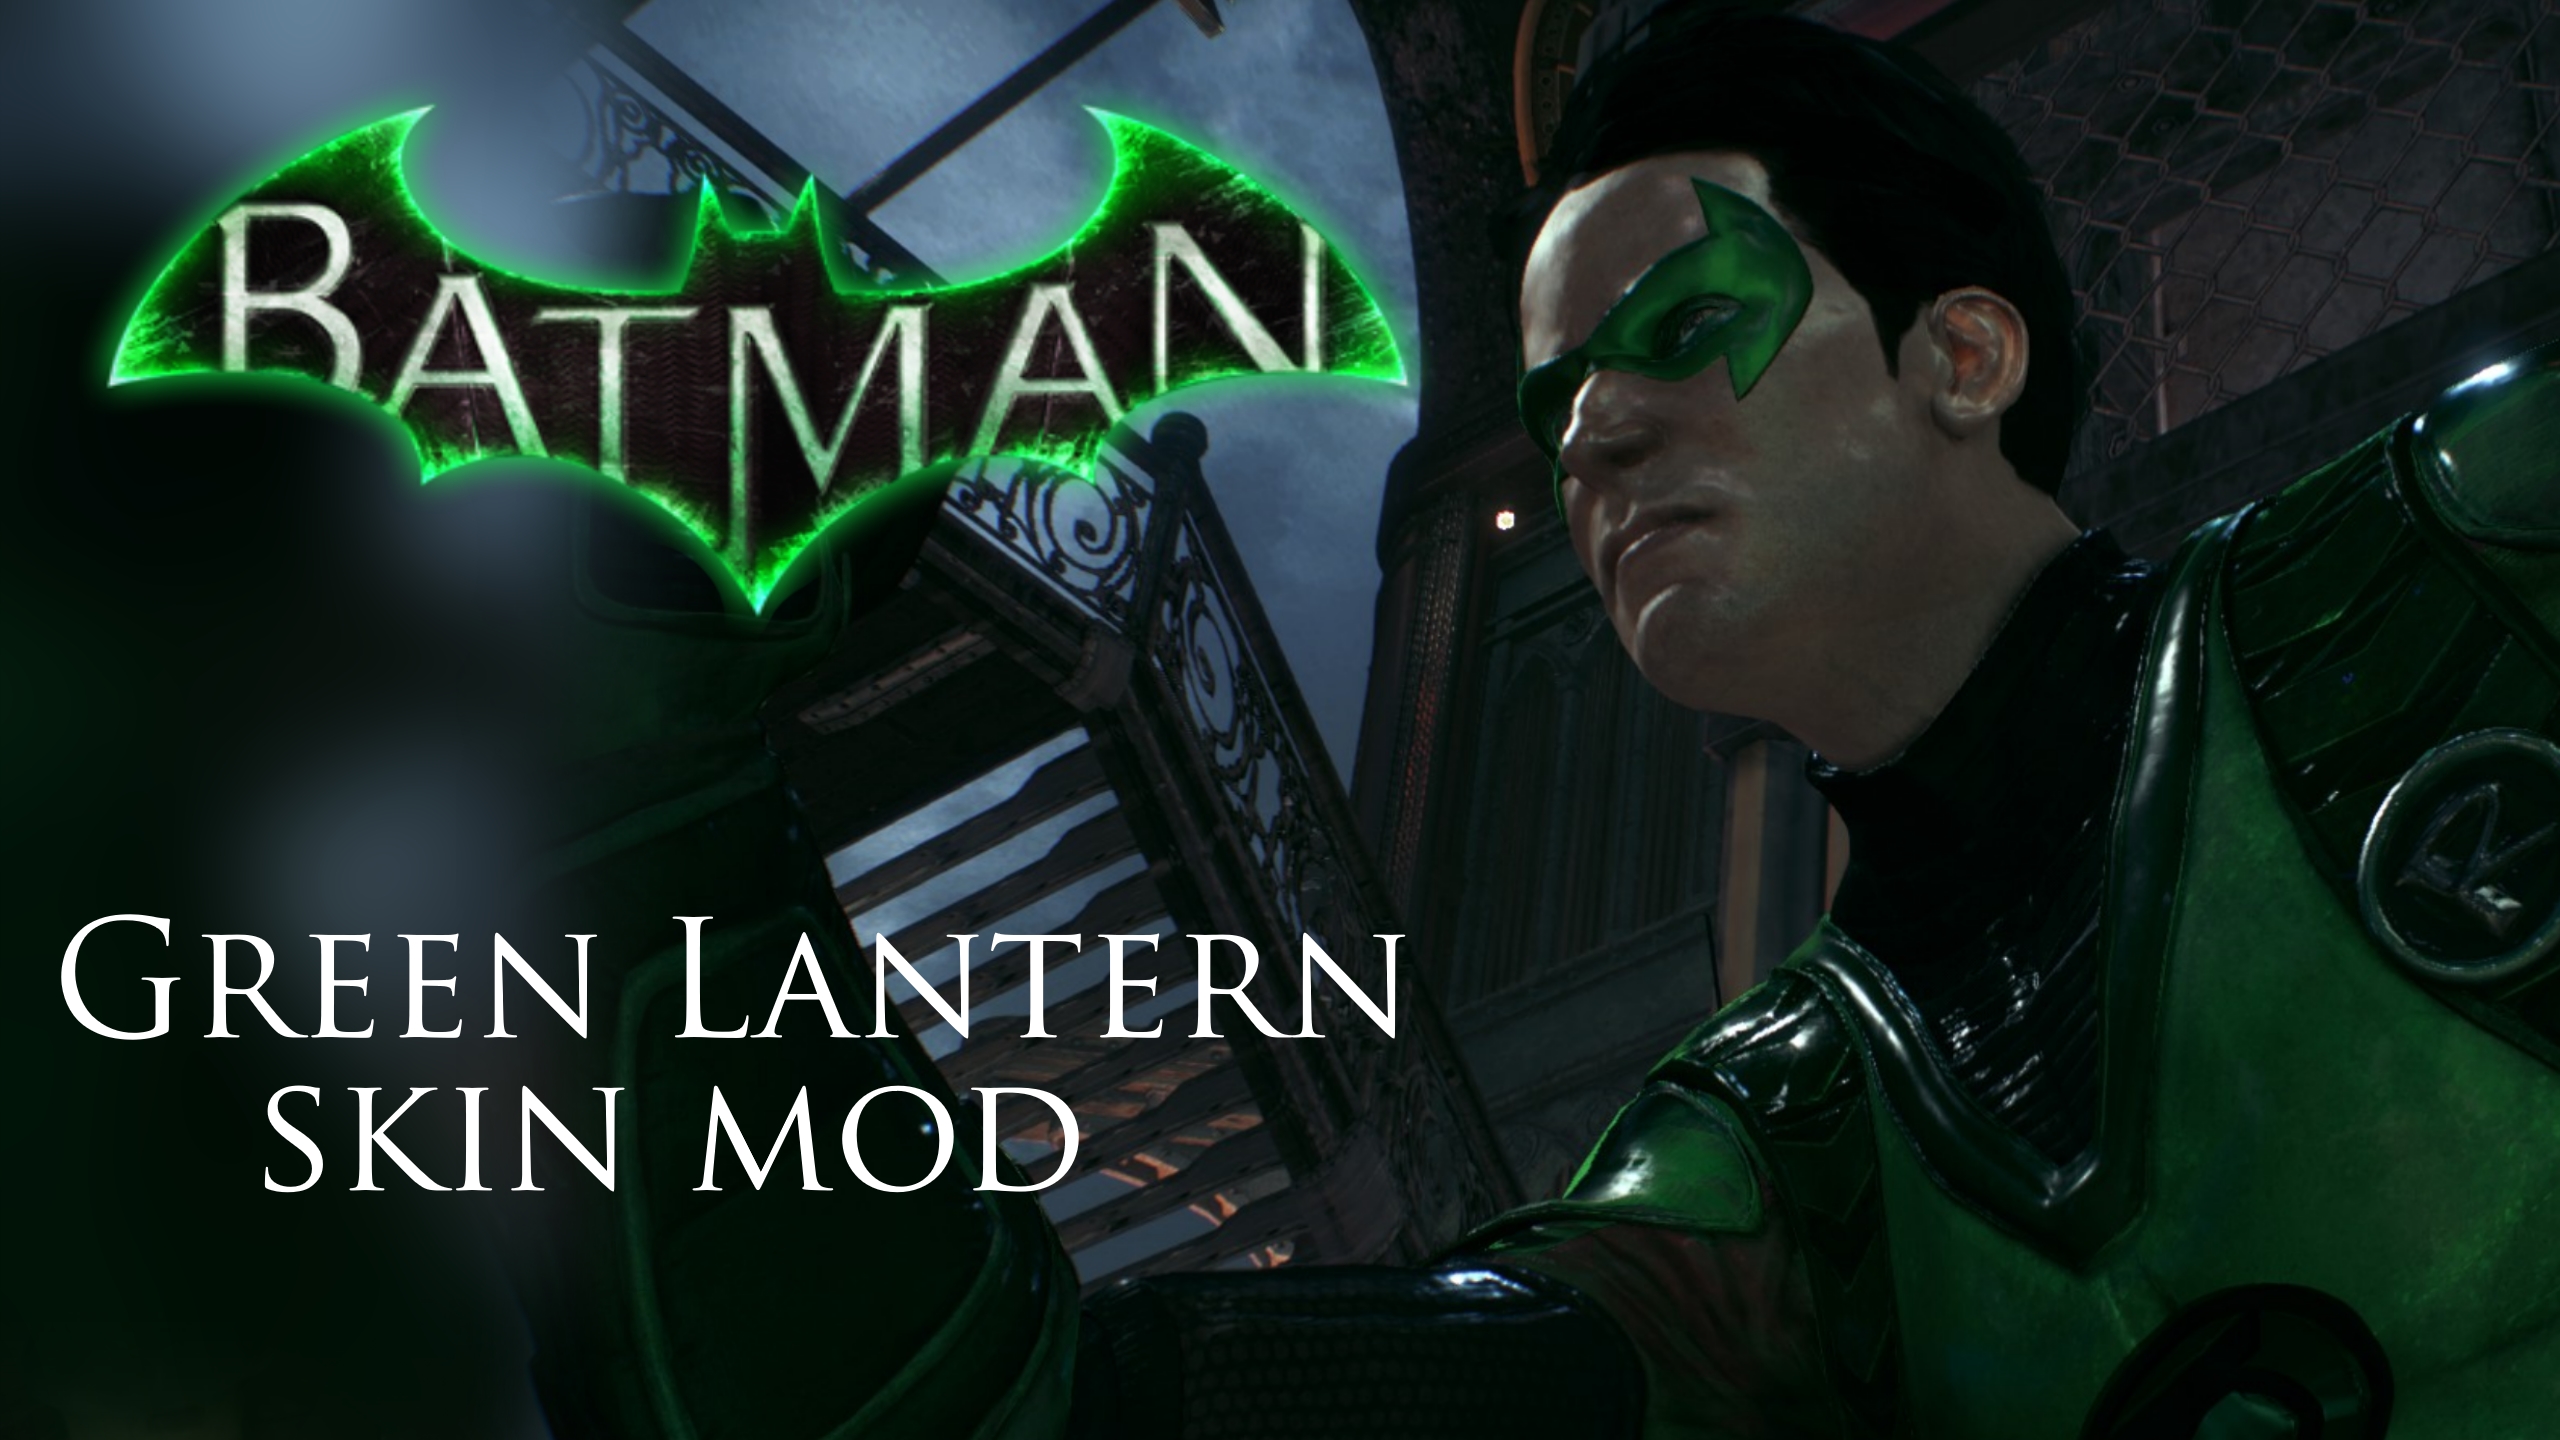 Green Lantern mod for Batman Arkham Knight by thebatmanhimself on DeviantArt